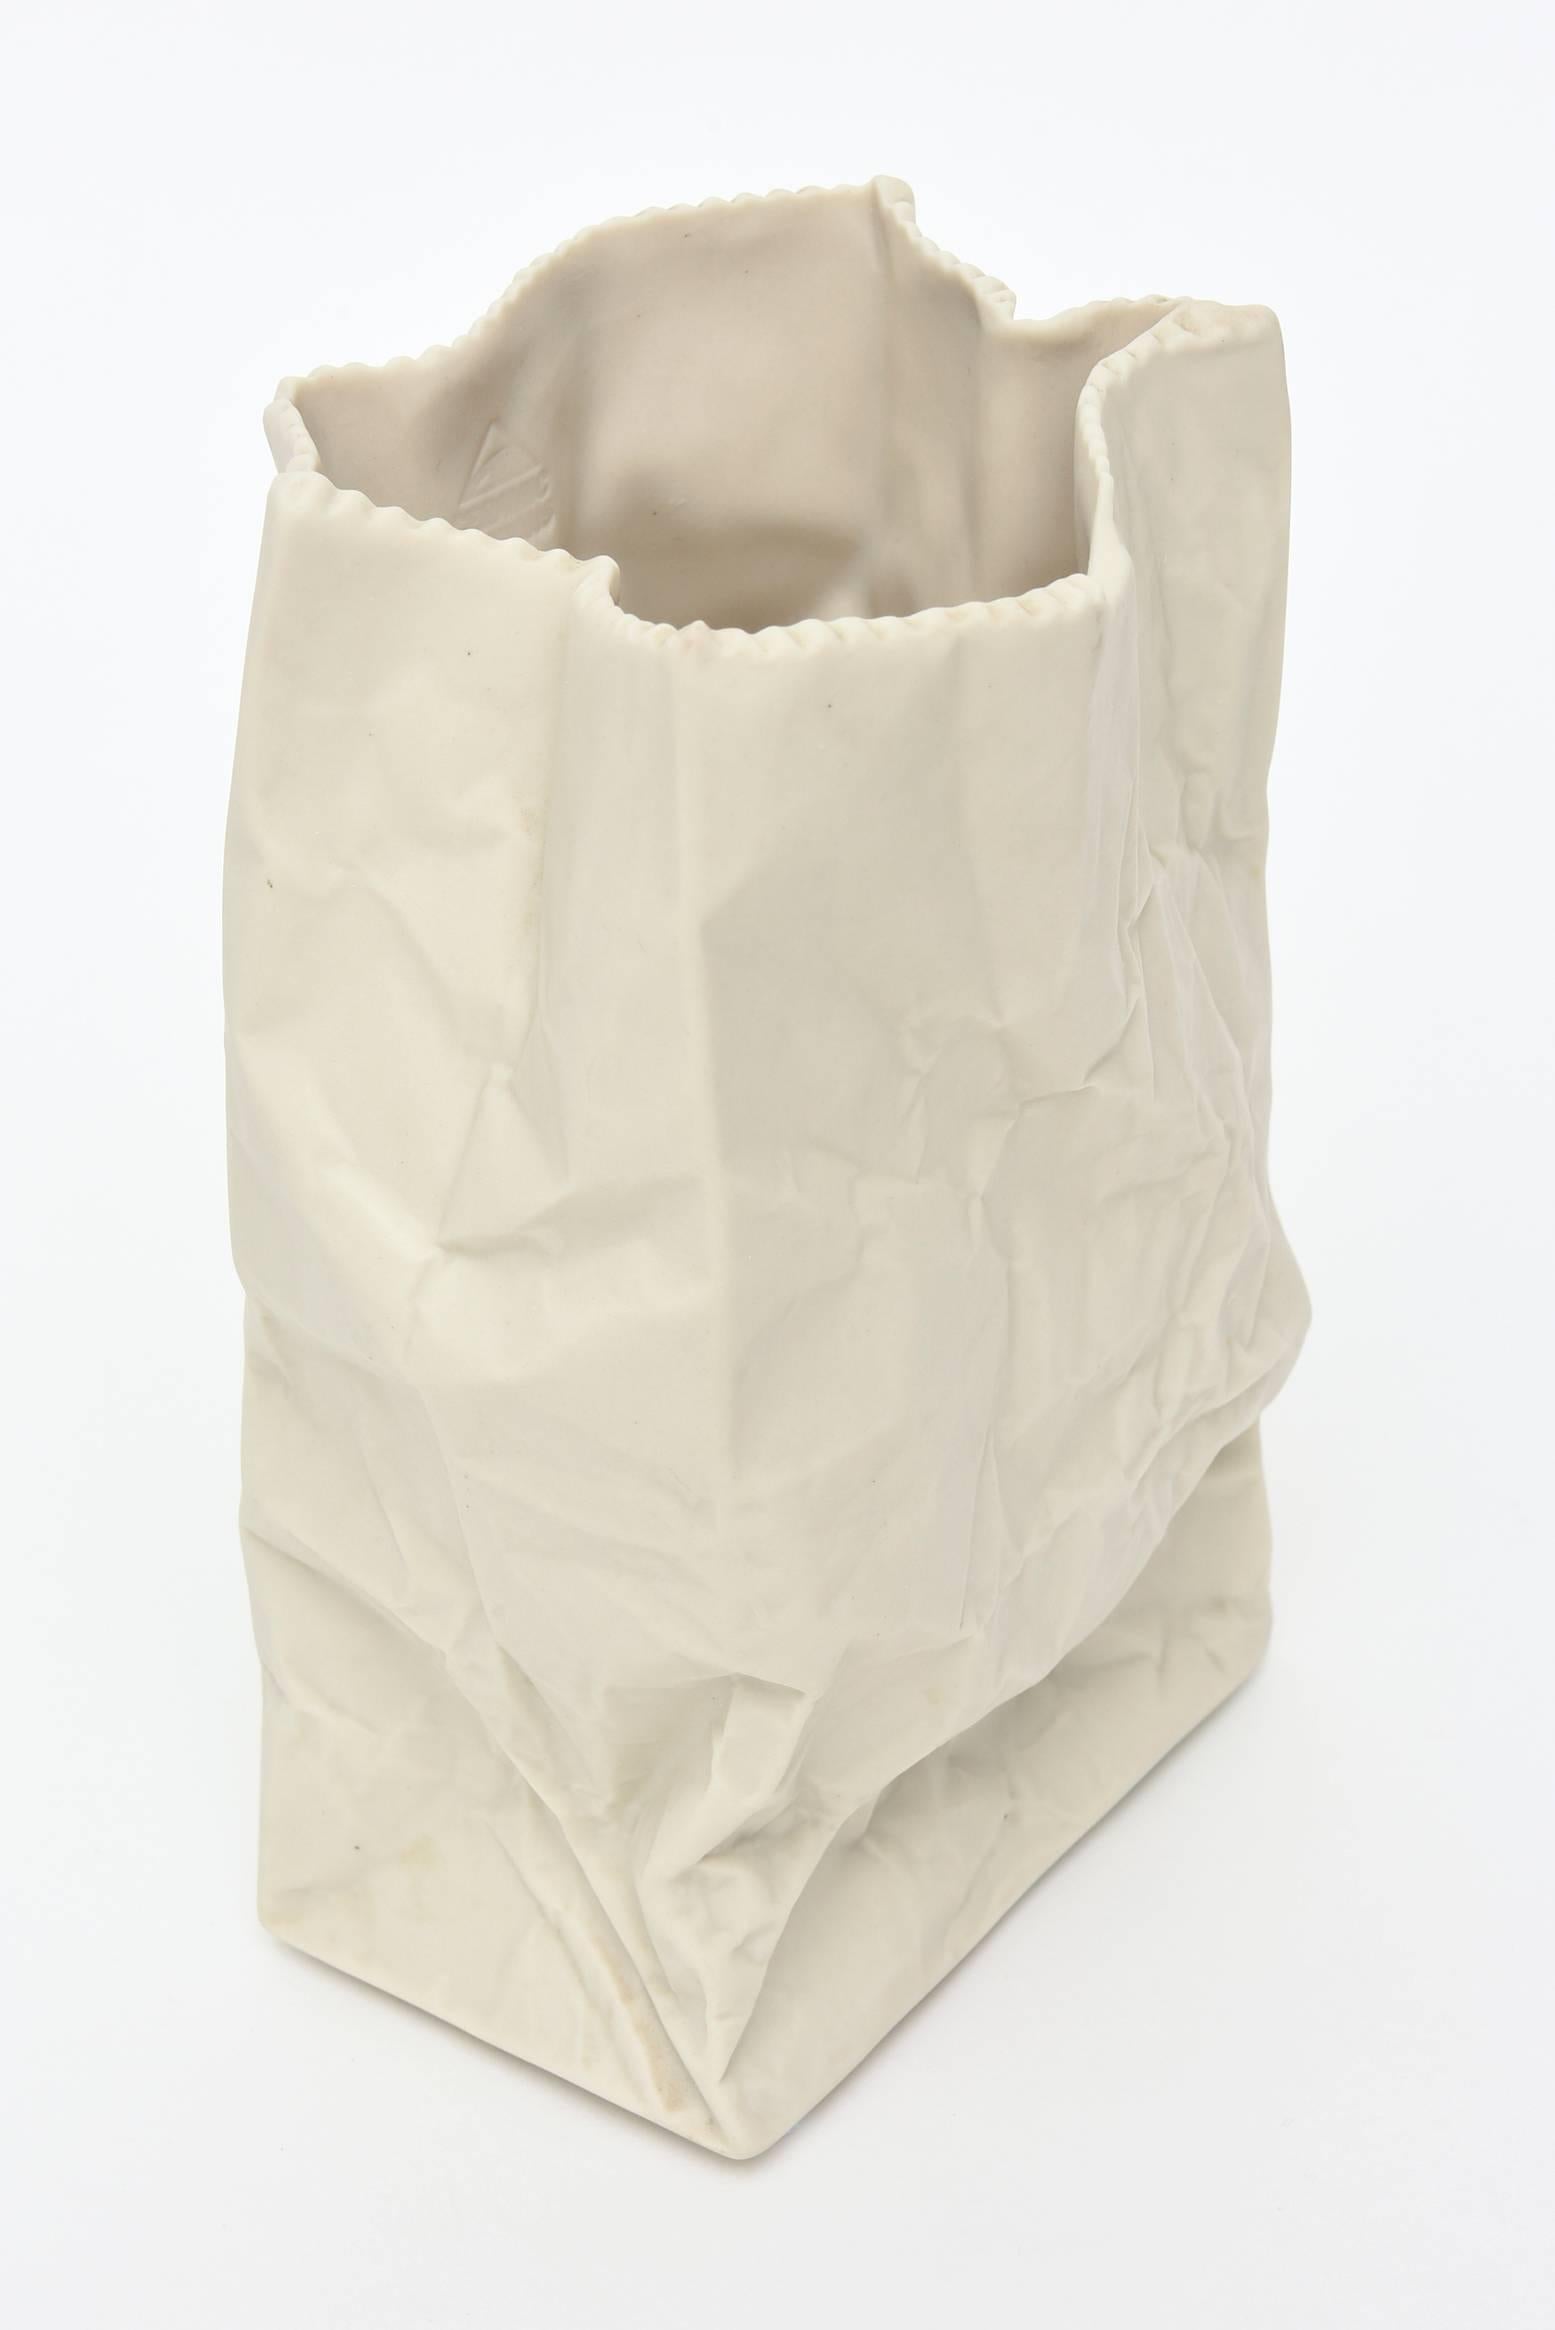 Organic Modern Crushed and Folded Bag Ceramic Sculpture or Vase /SATURDAY SALE